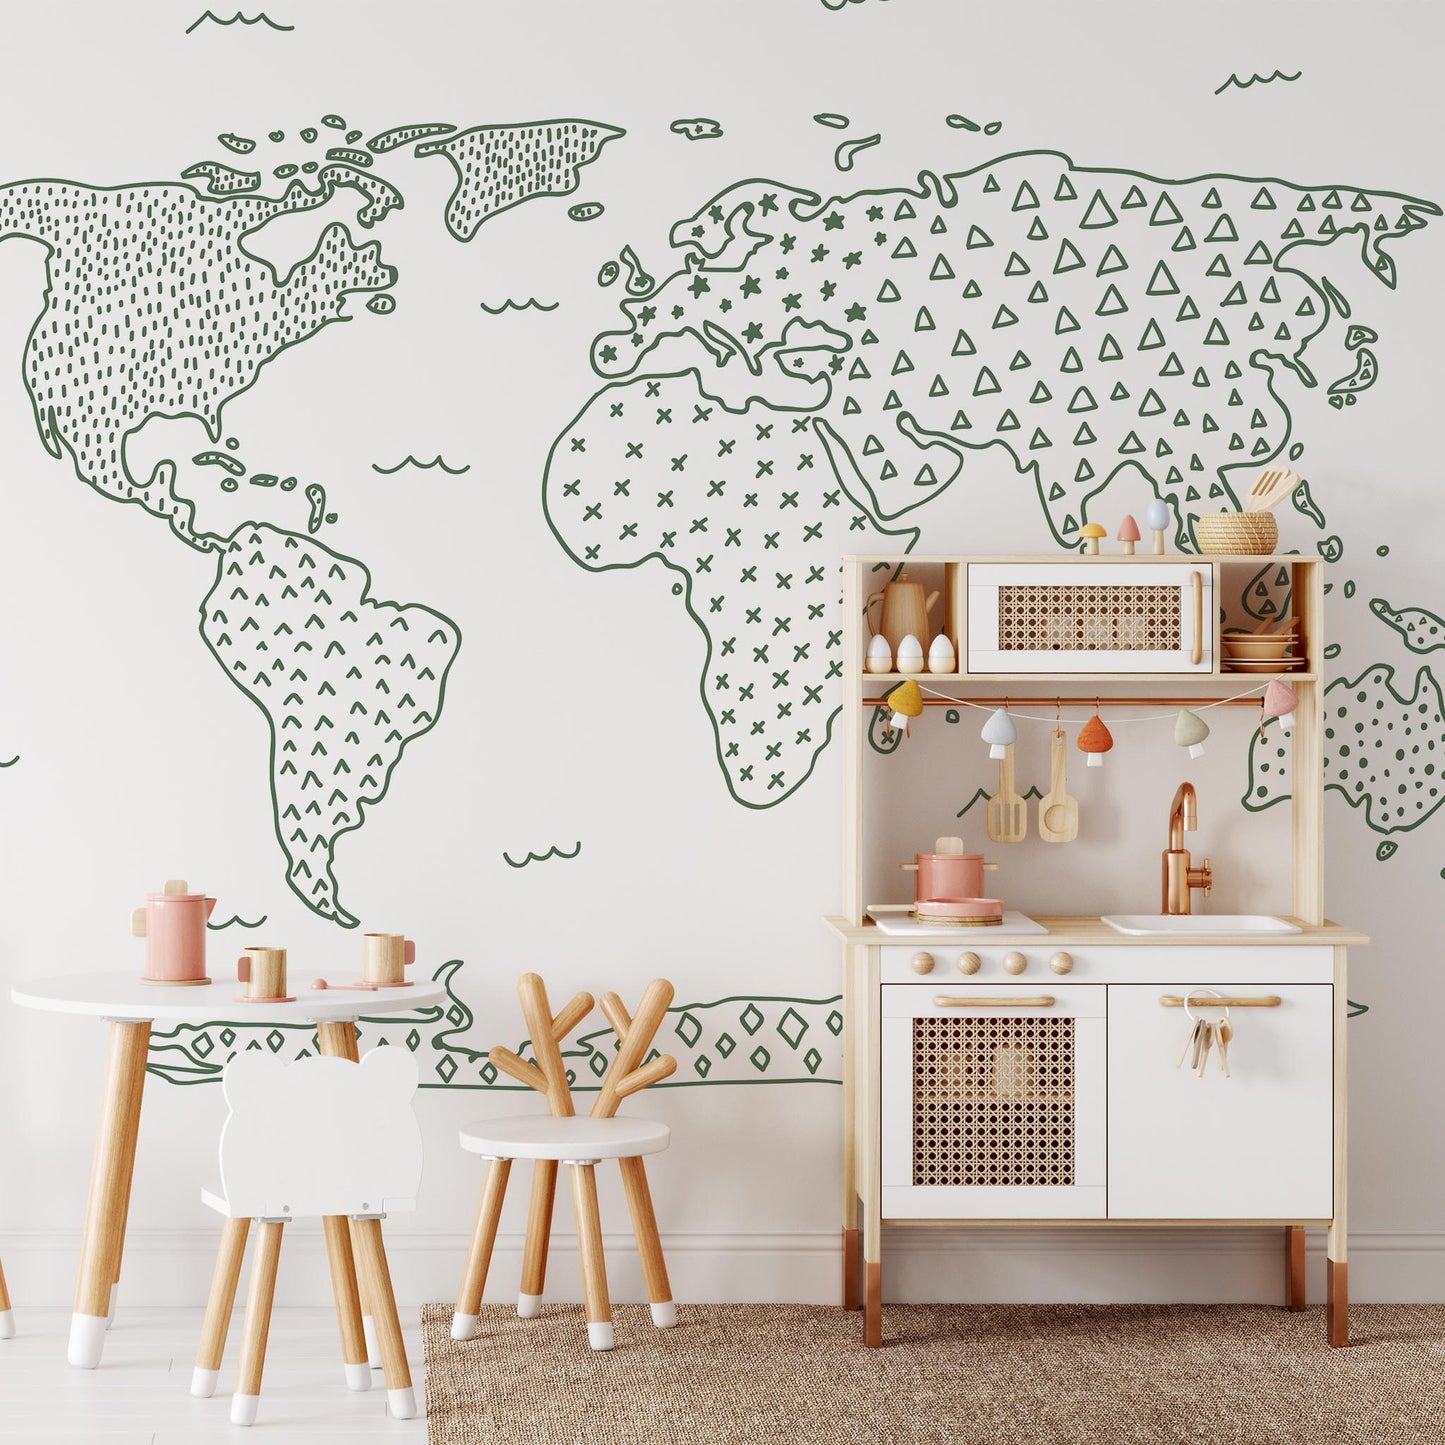 Playroom preview of Modern Map Wallpaper in Green by artist Brenda Bird